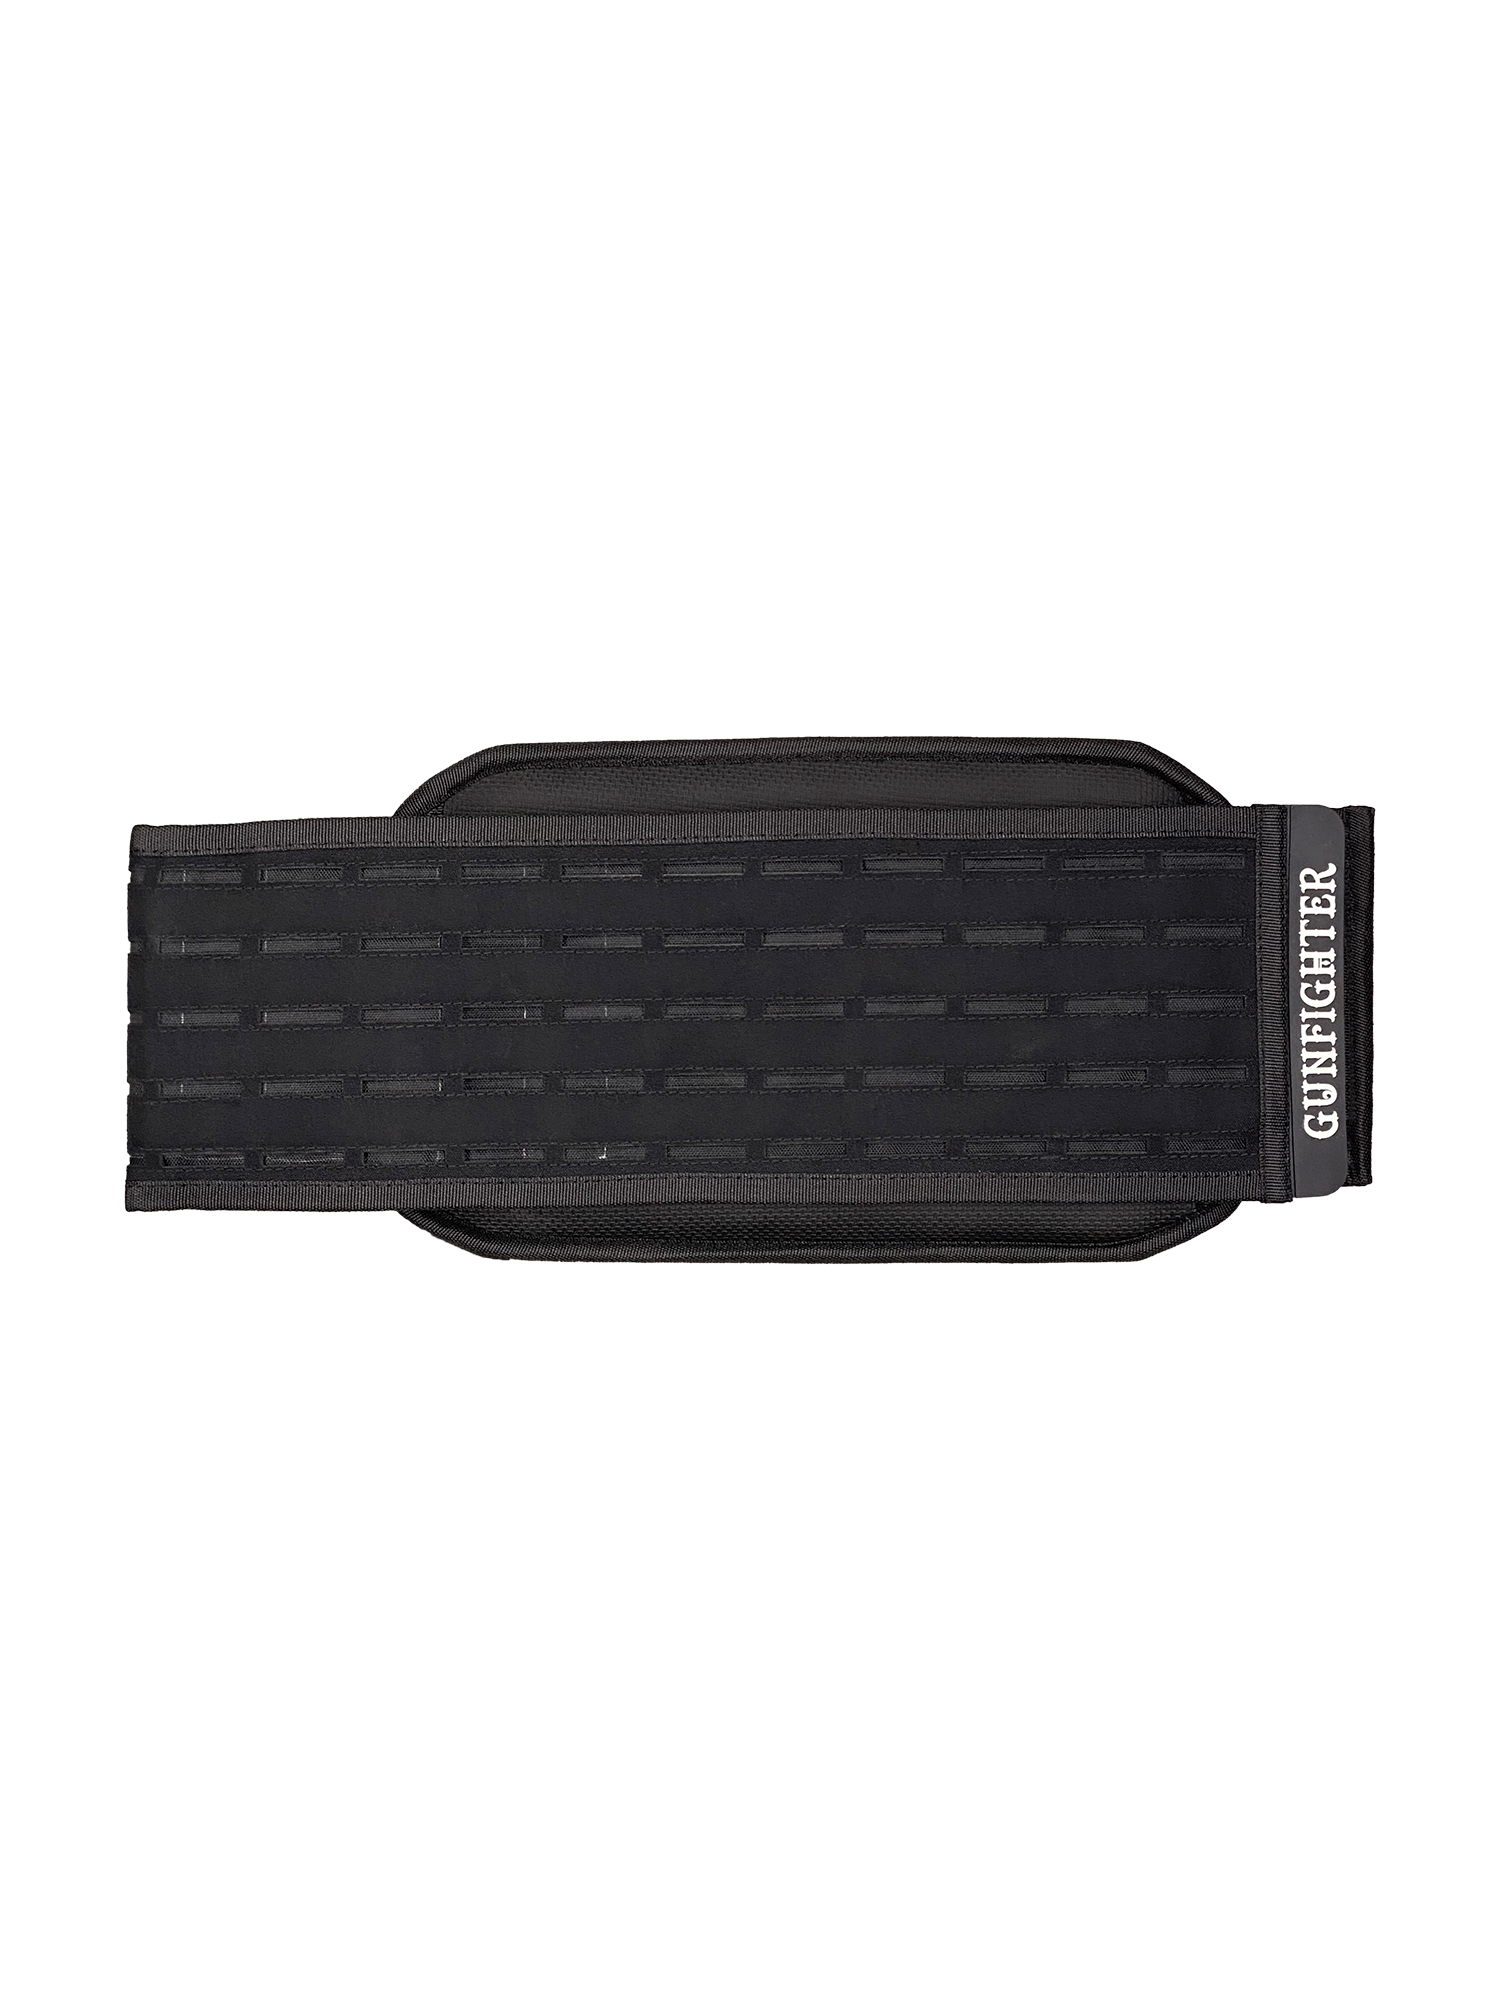 Gunfighter Airsoft Tac Pack - Black